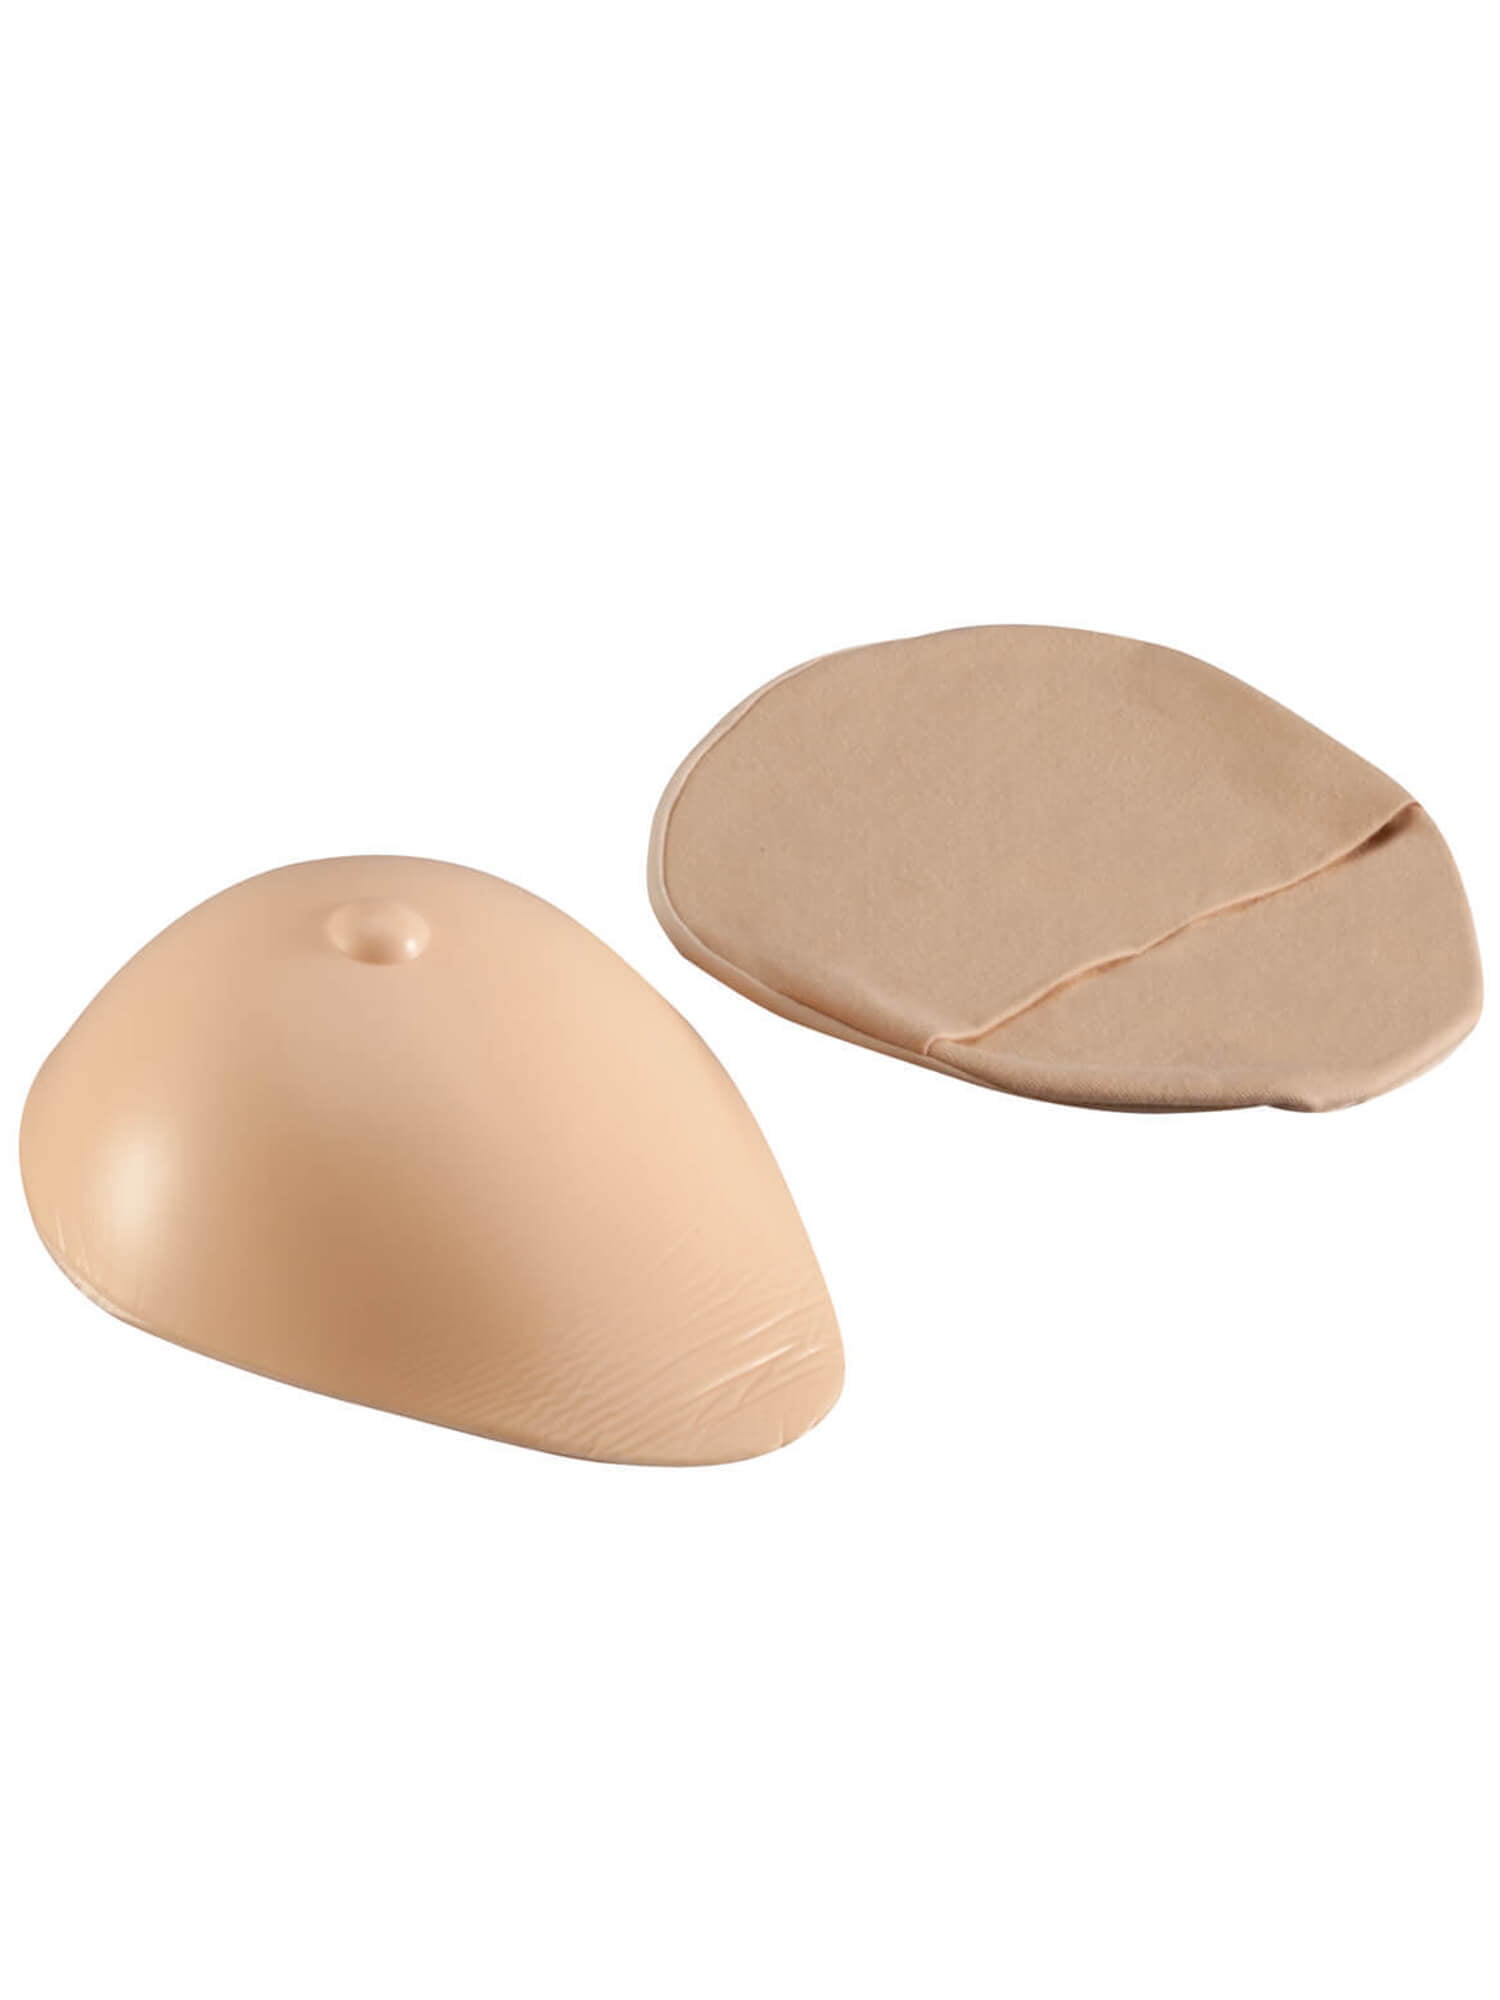 Lightweight Silicone Teardrop Breast Form, 1 Form 